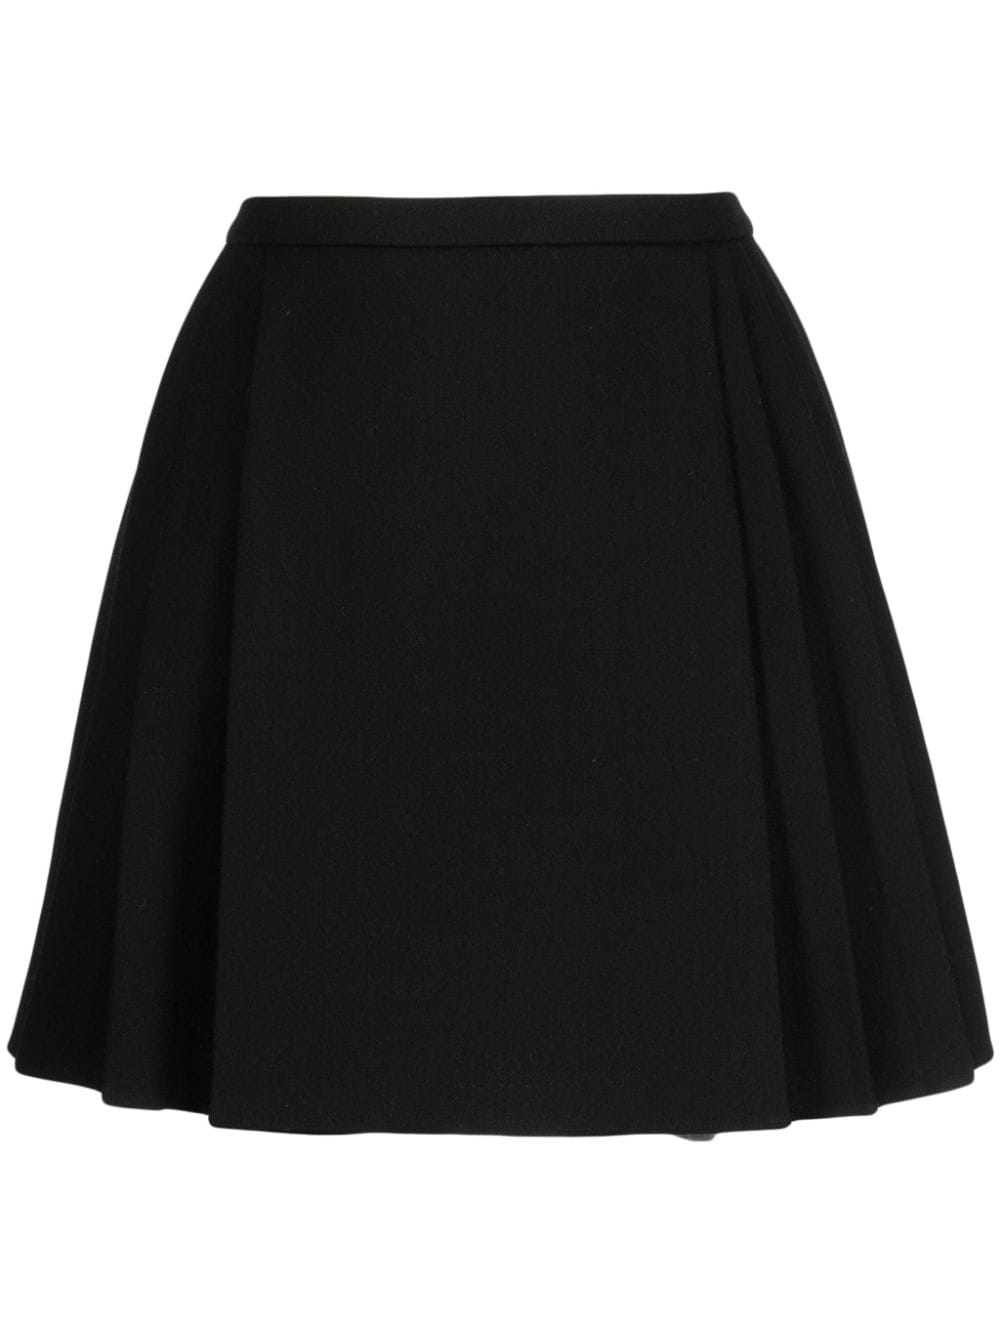 Dice Kayek pleated knitted high-waisted skirt - Black von Dice Kayek